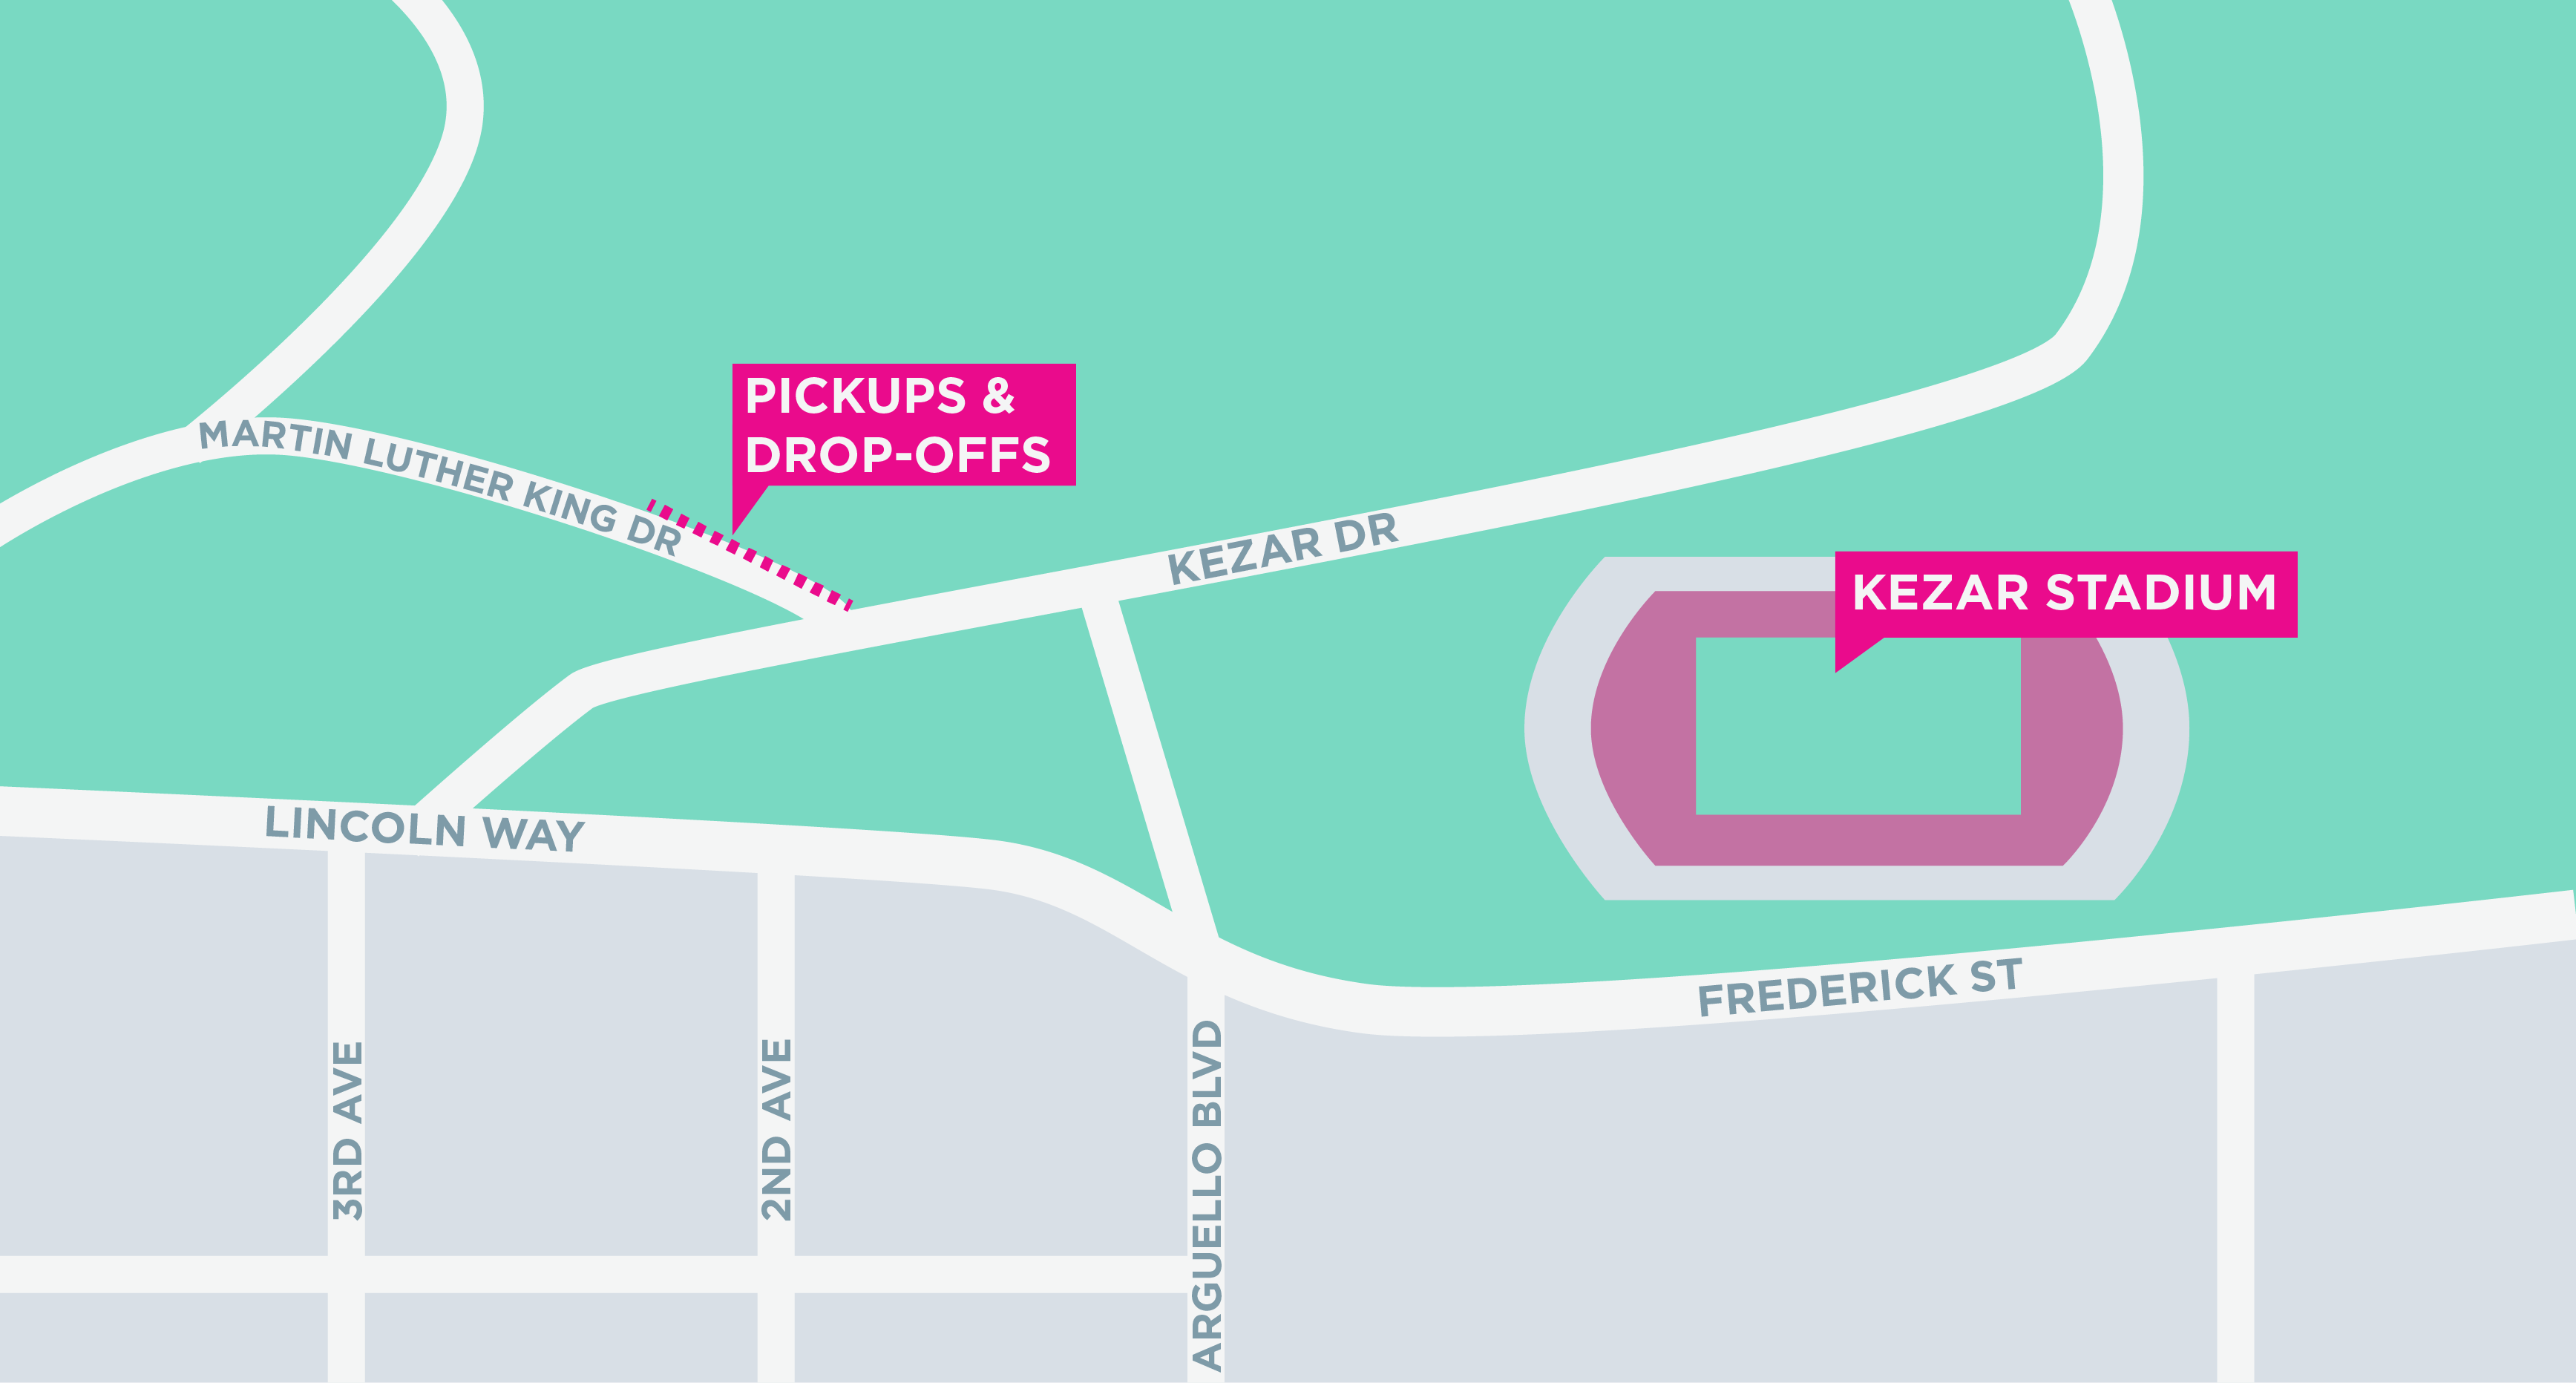 Map of Kezar Stadium in San Francisco, CA